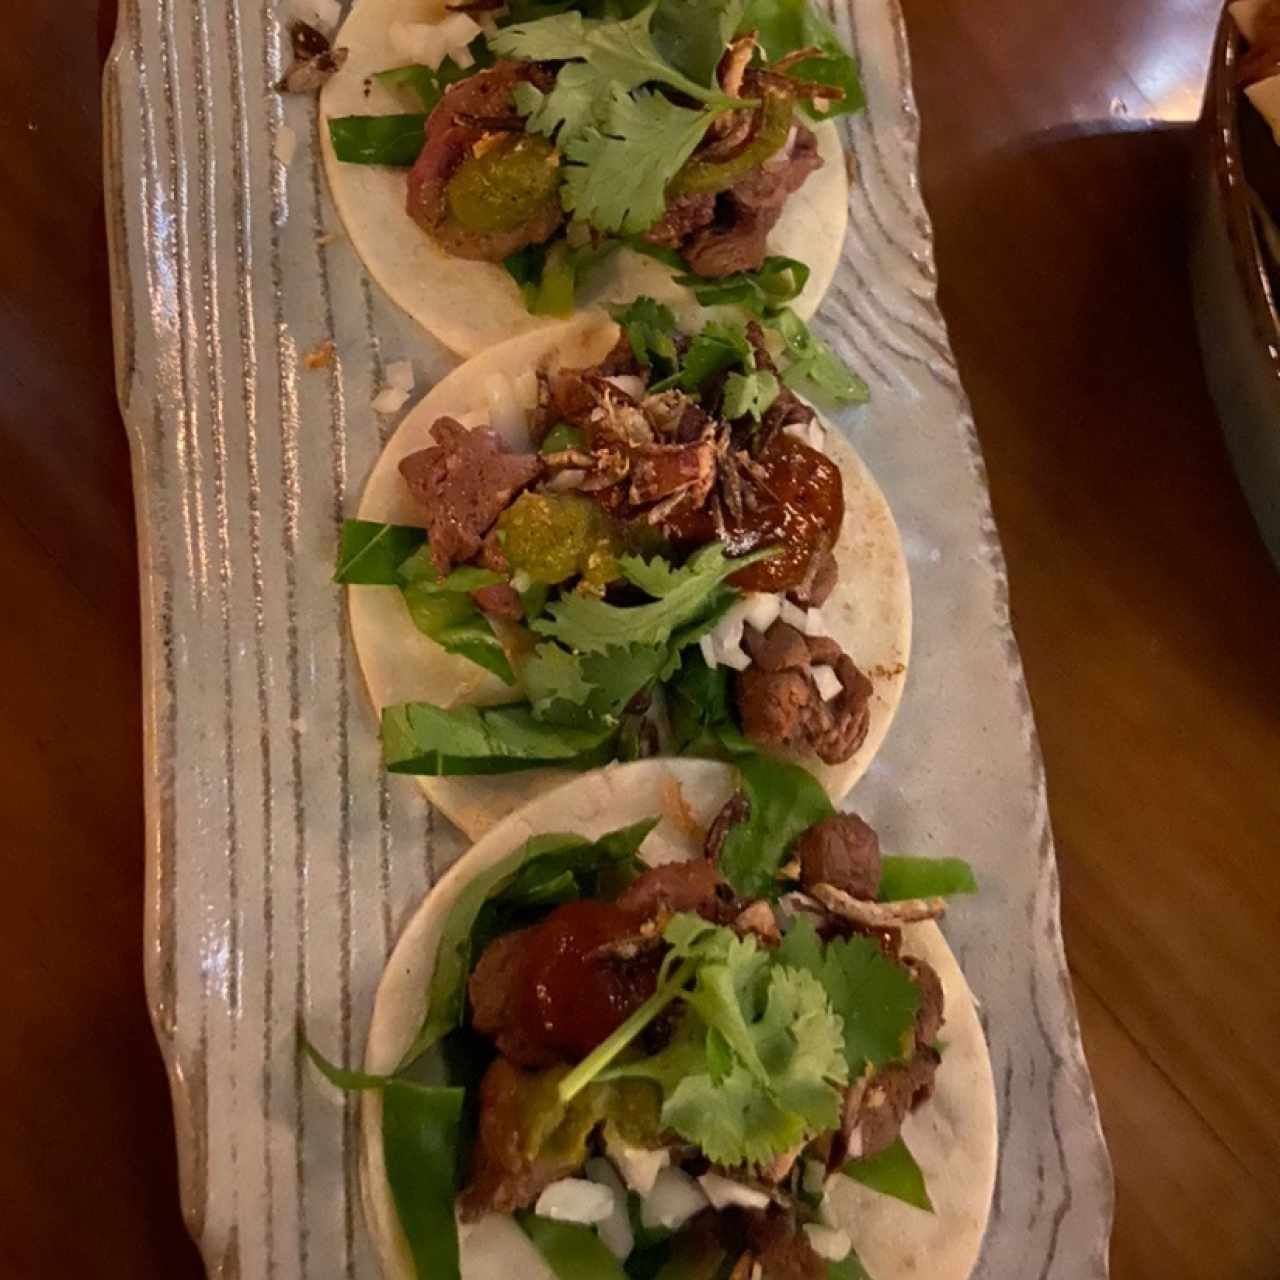 SMALL PLATES - Steak Tacos